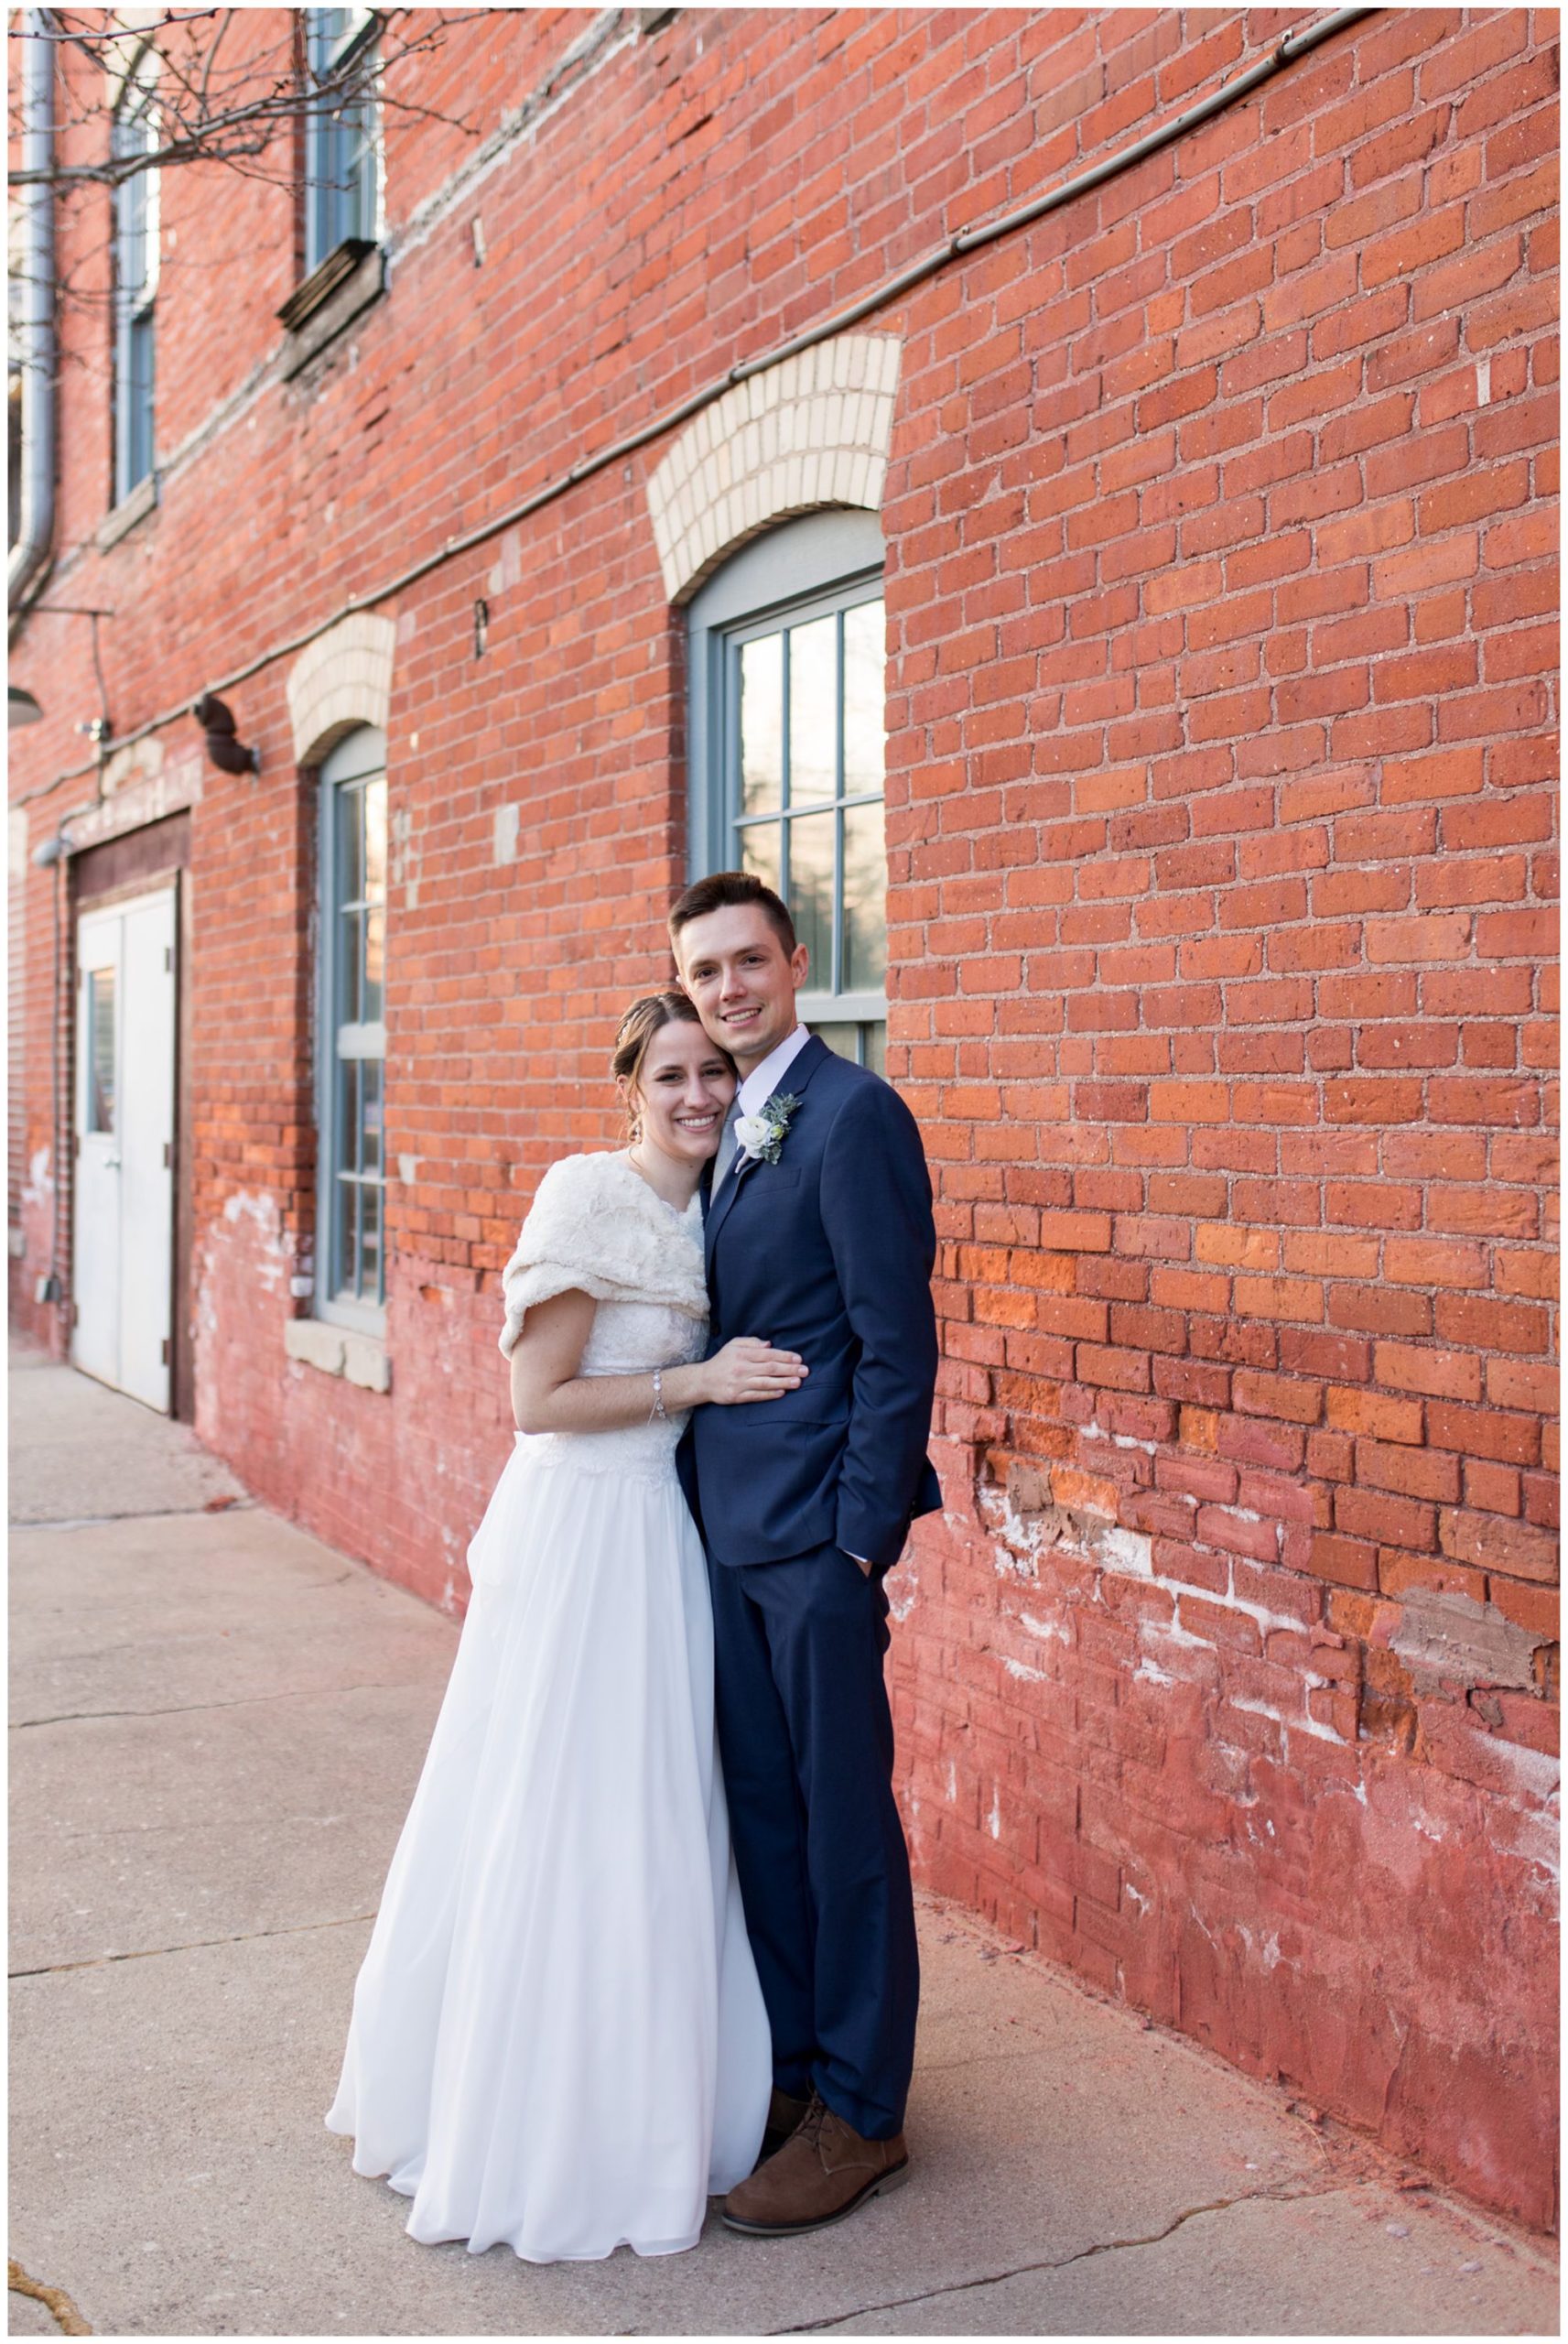 Goshen Indiana bride and groom wedding photos at Old Bag Factory